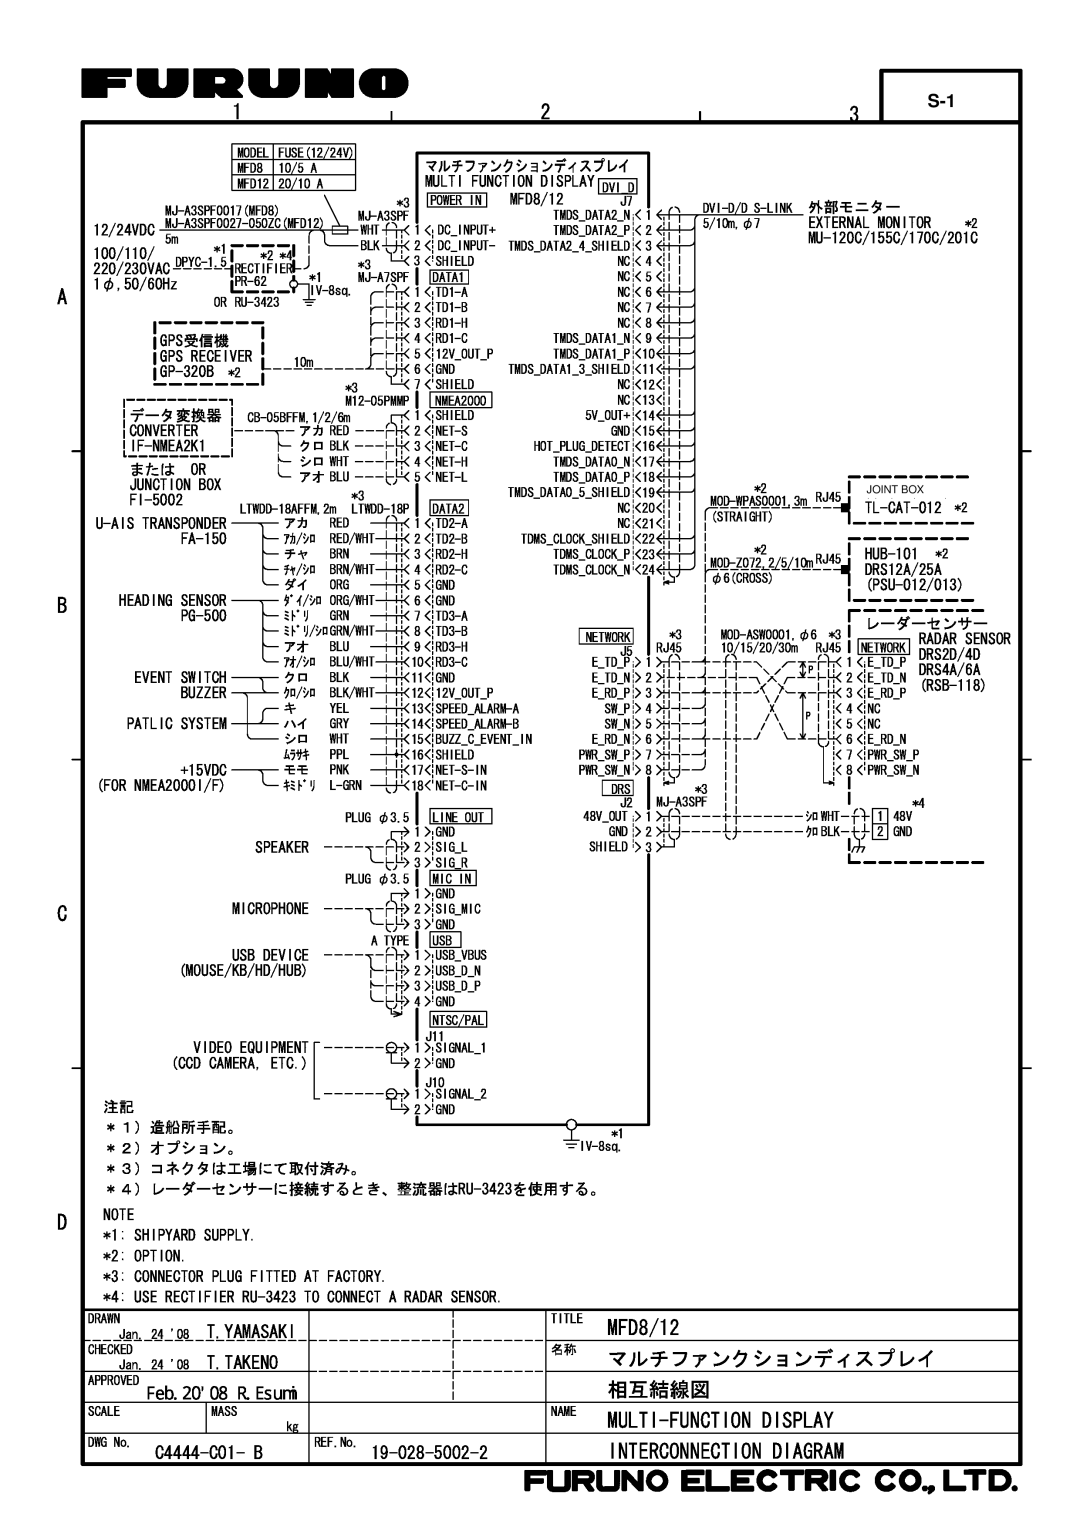 Furuno MFD8/12/BB manual A B C D, マルチファンクションディスプレイ, 相互結線図, Multi-Functiondisplay, Interconnection Diagram 